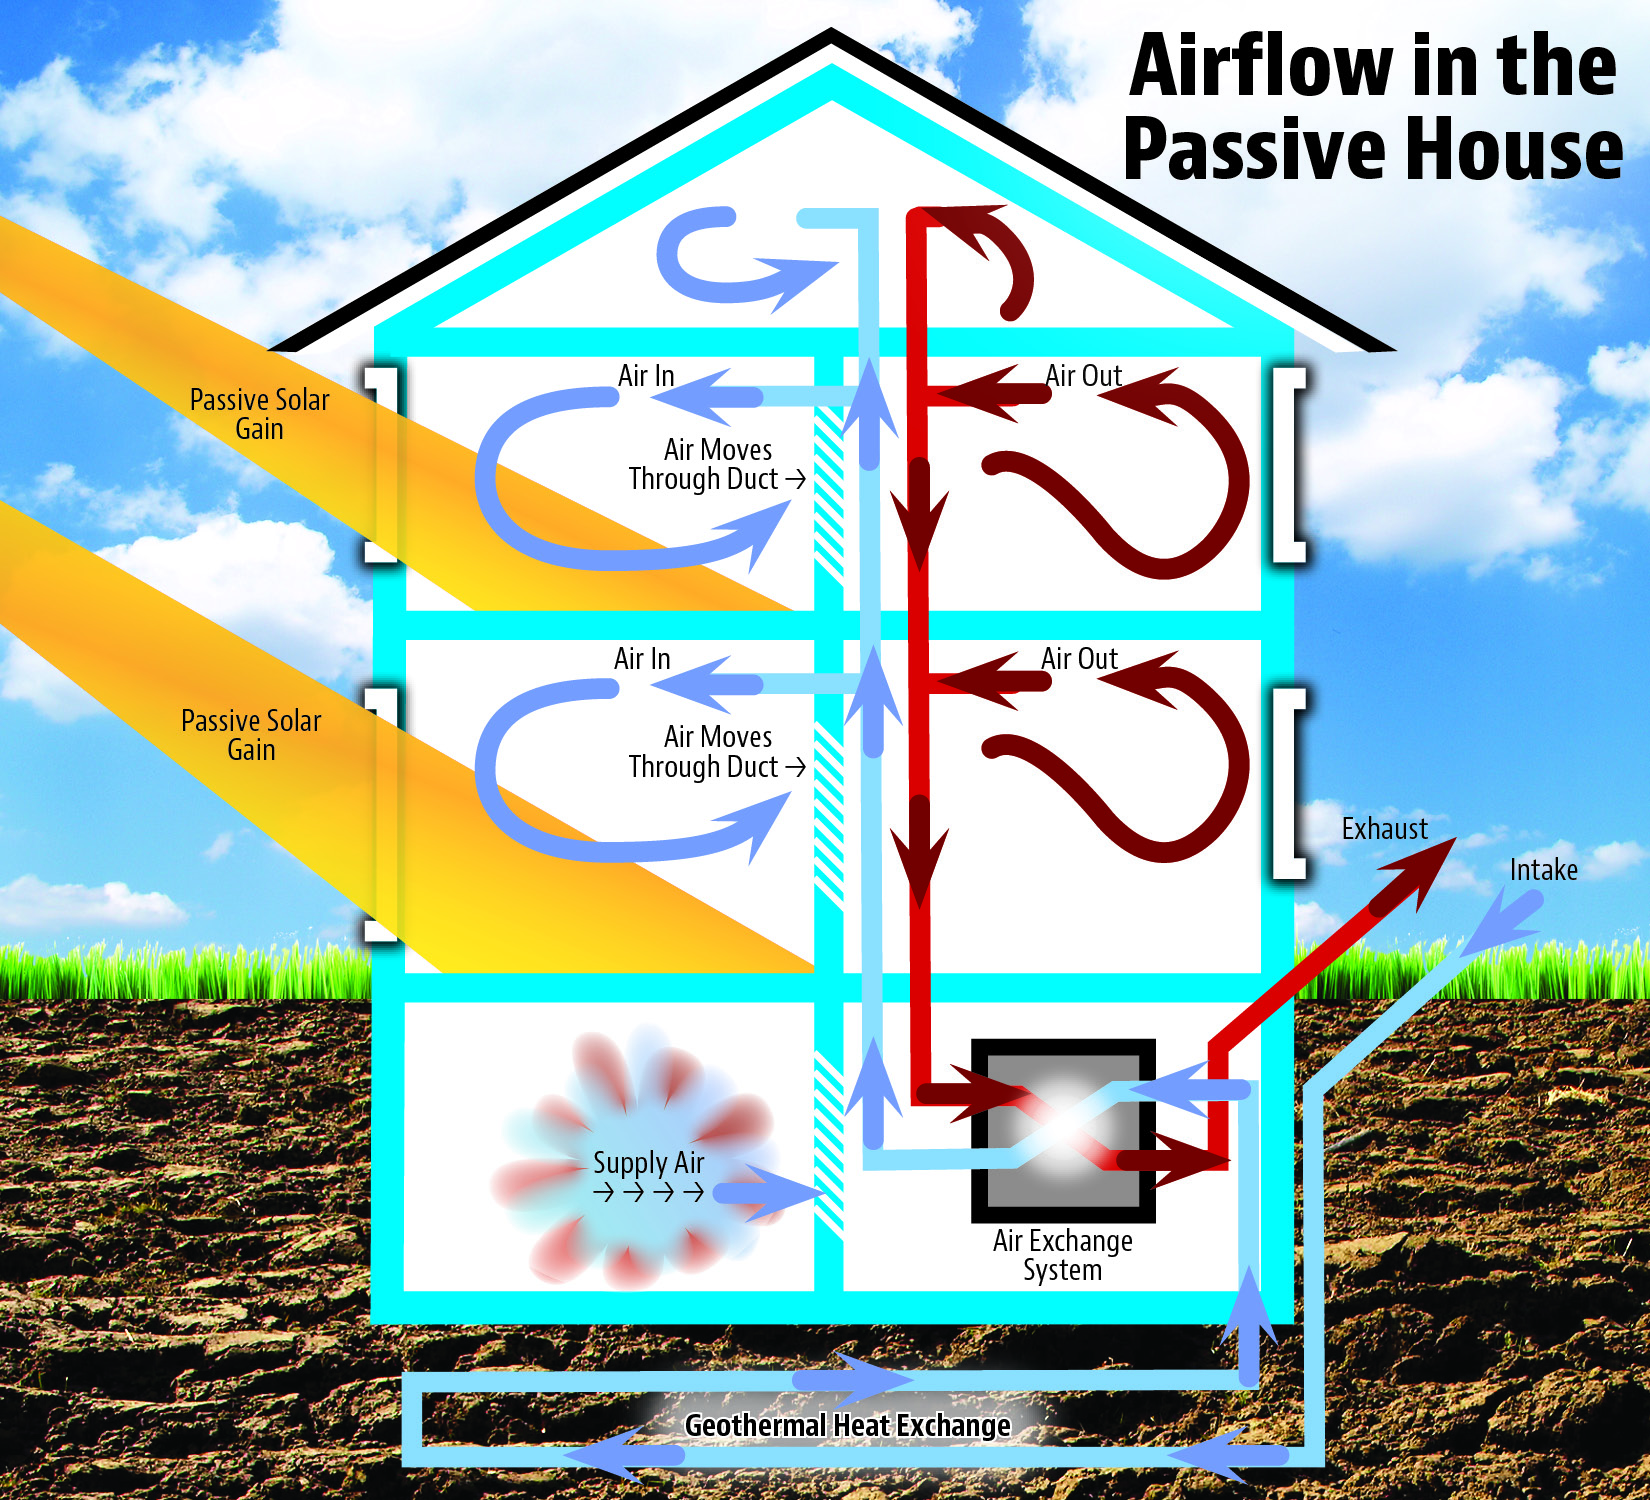 Passive House Airflow